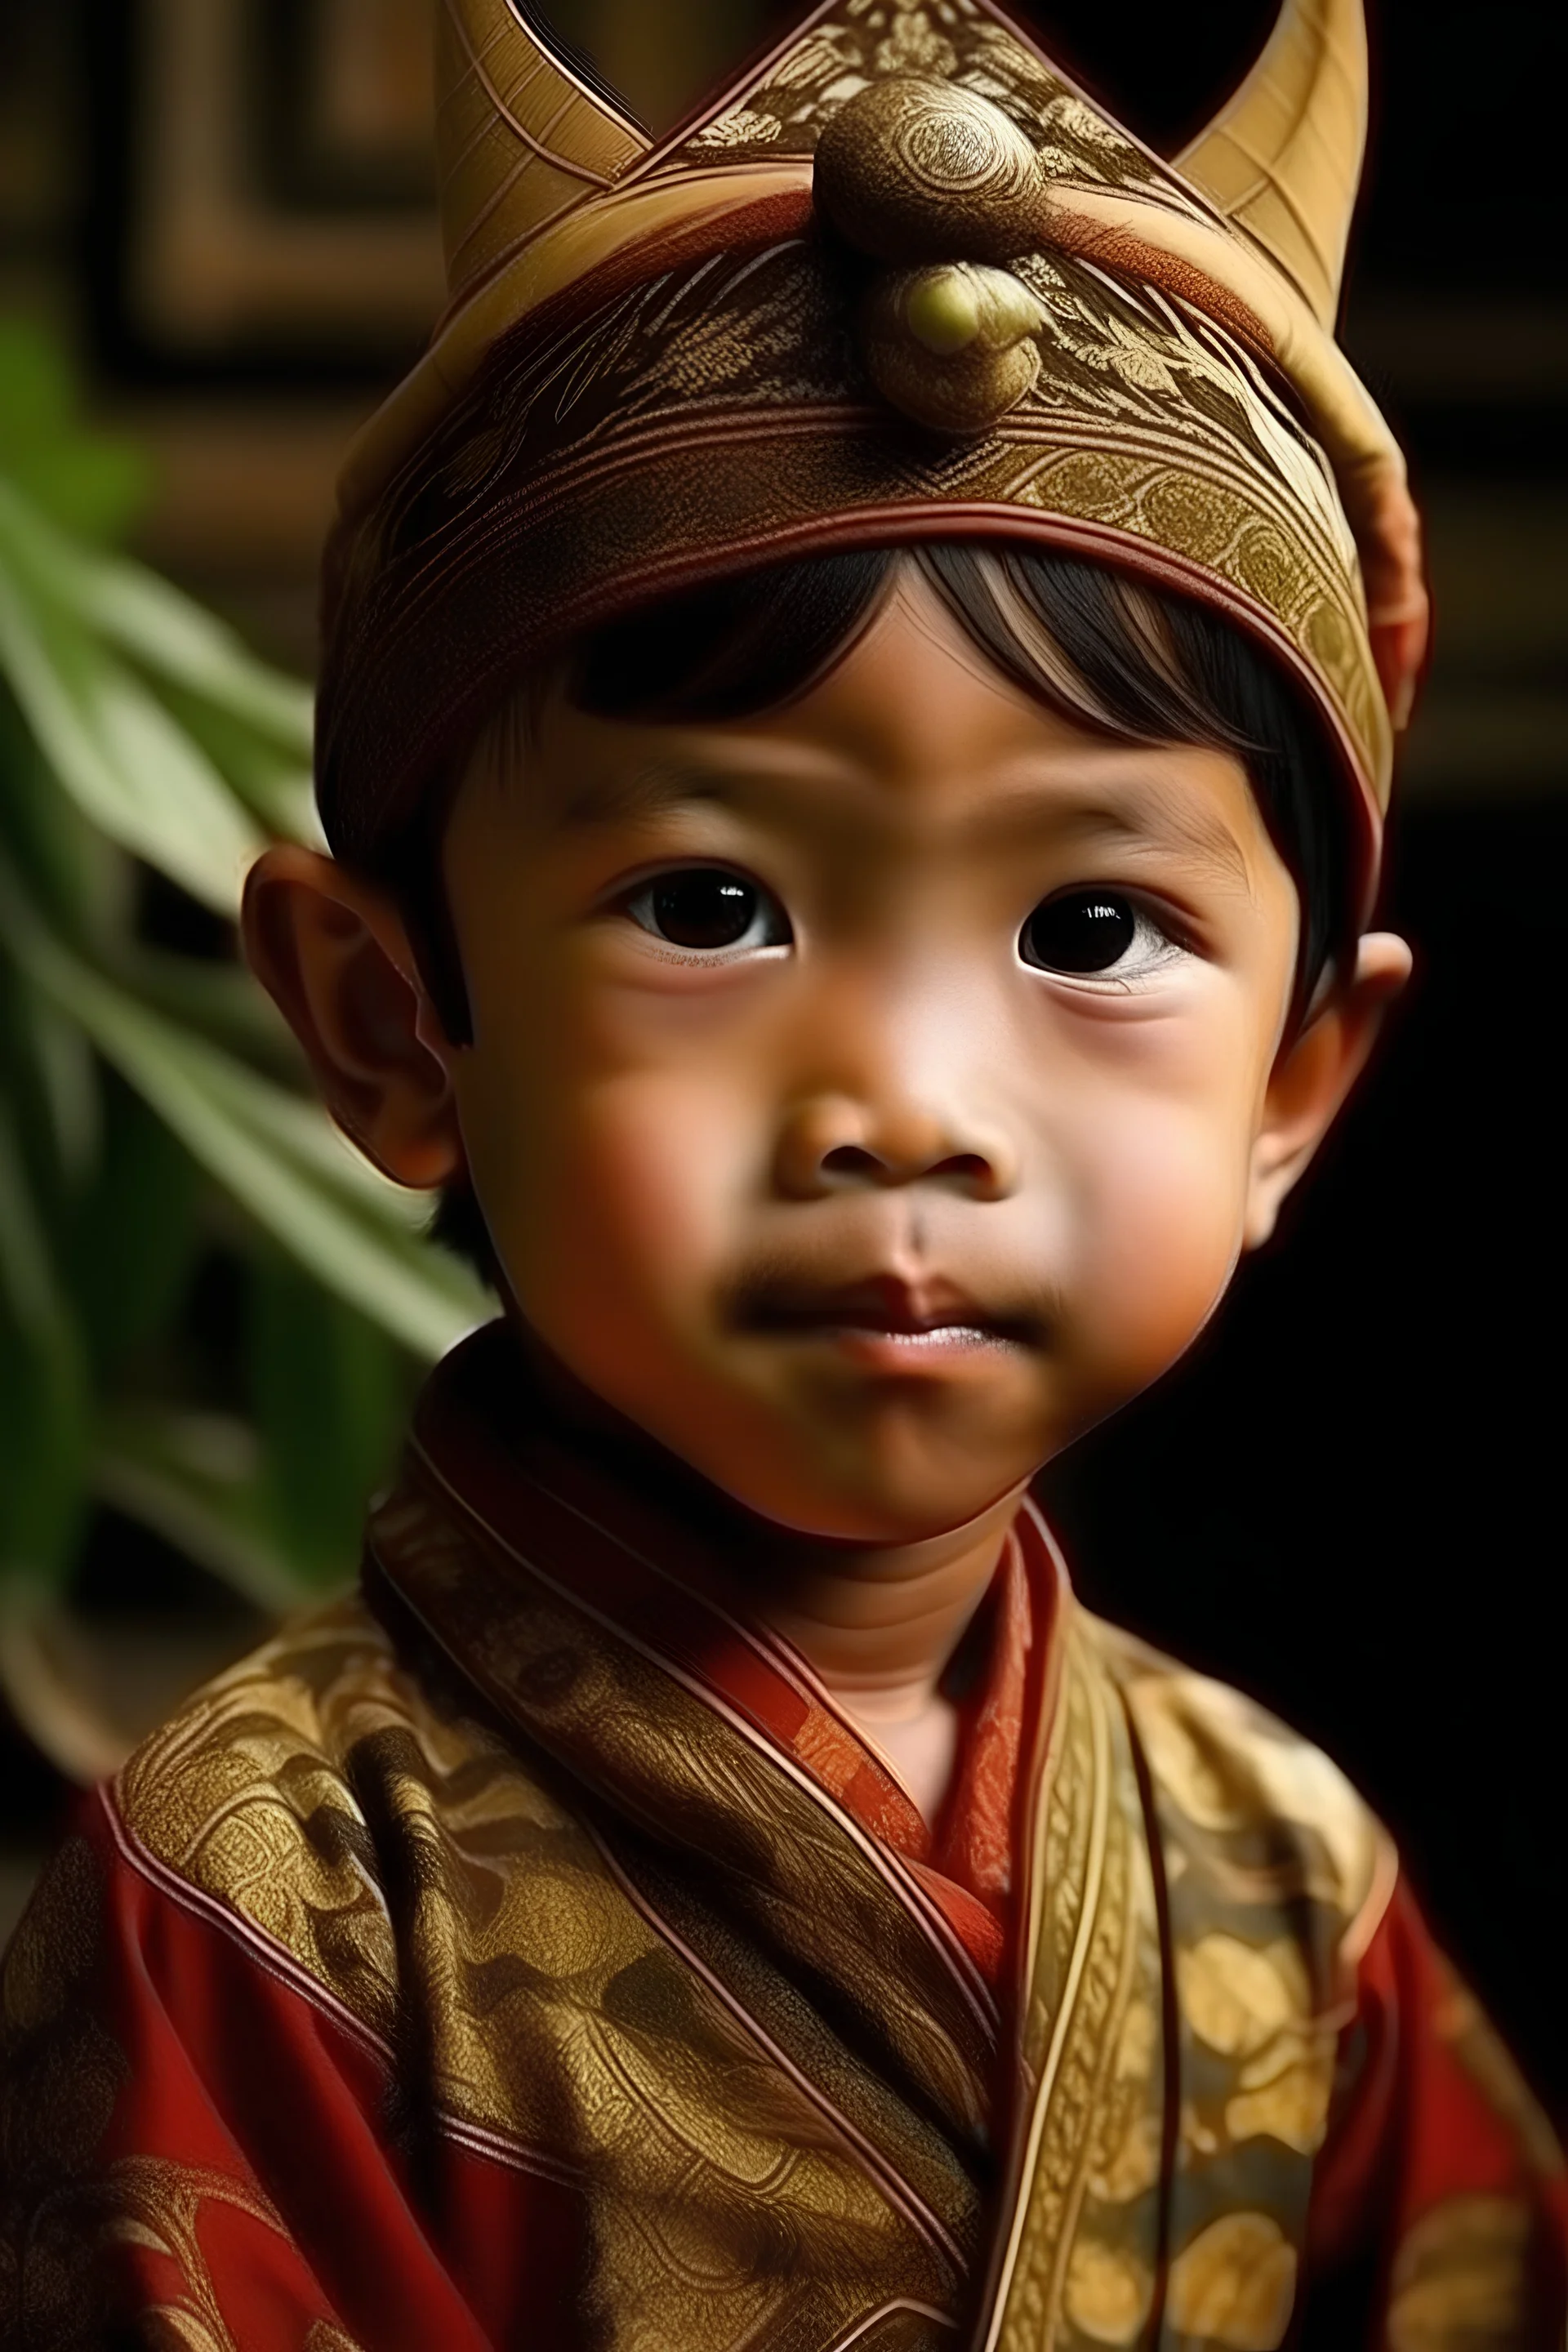 Buatkan foto mbak yuli masa kecil, wajah asli dari ambarawa Jawa twngah